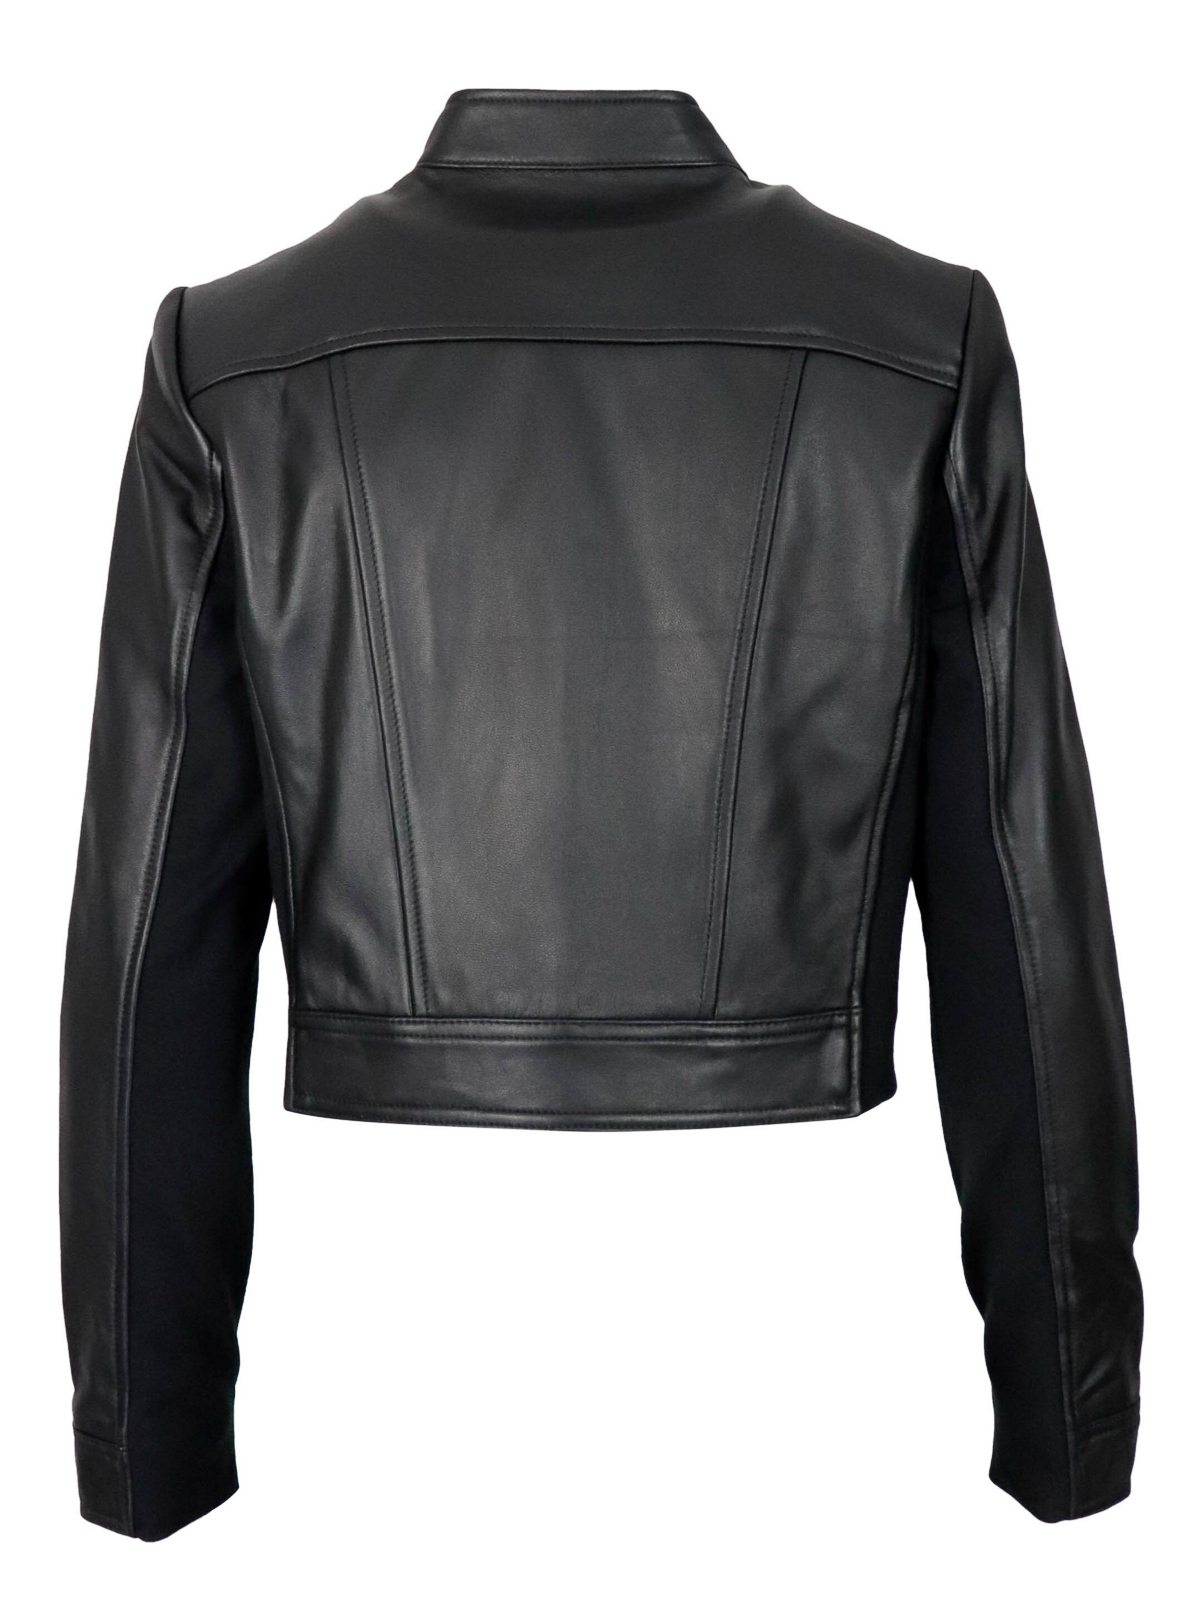 michael kors silver leather jacket